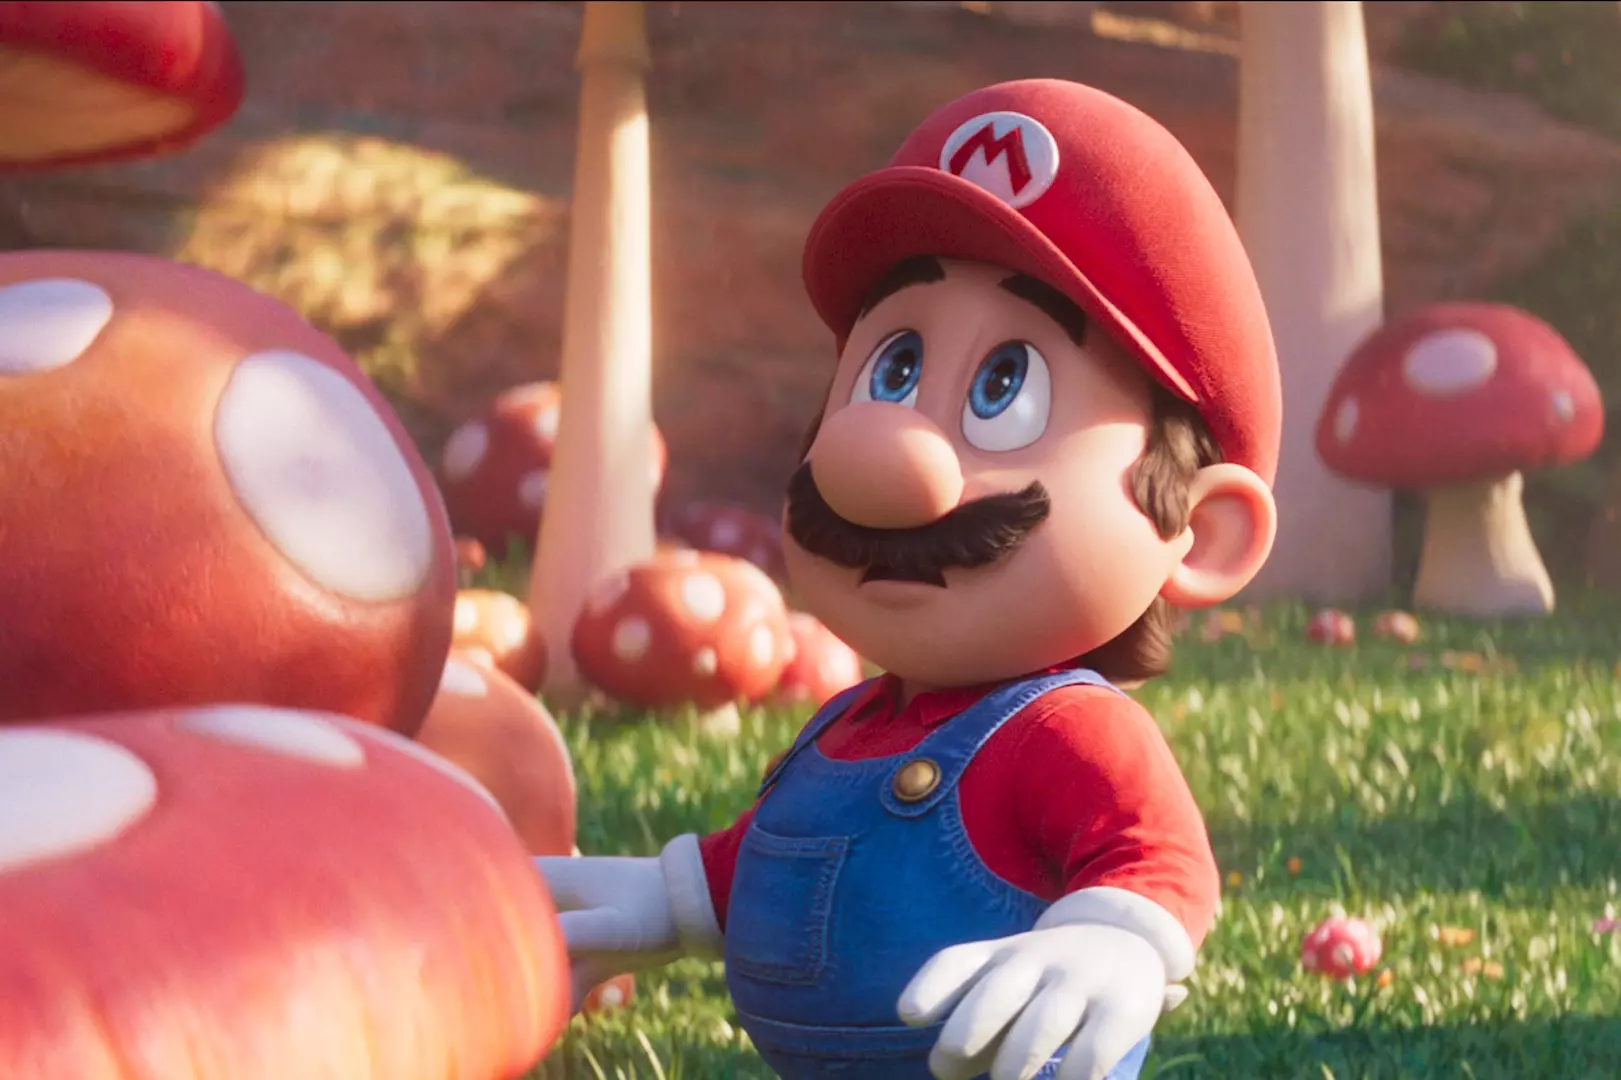 FILM REVIEW: The Super Mario Bros. Movie – Sac State Insider